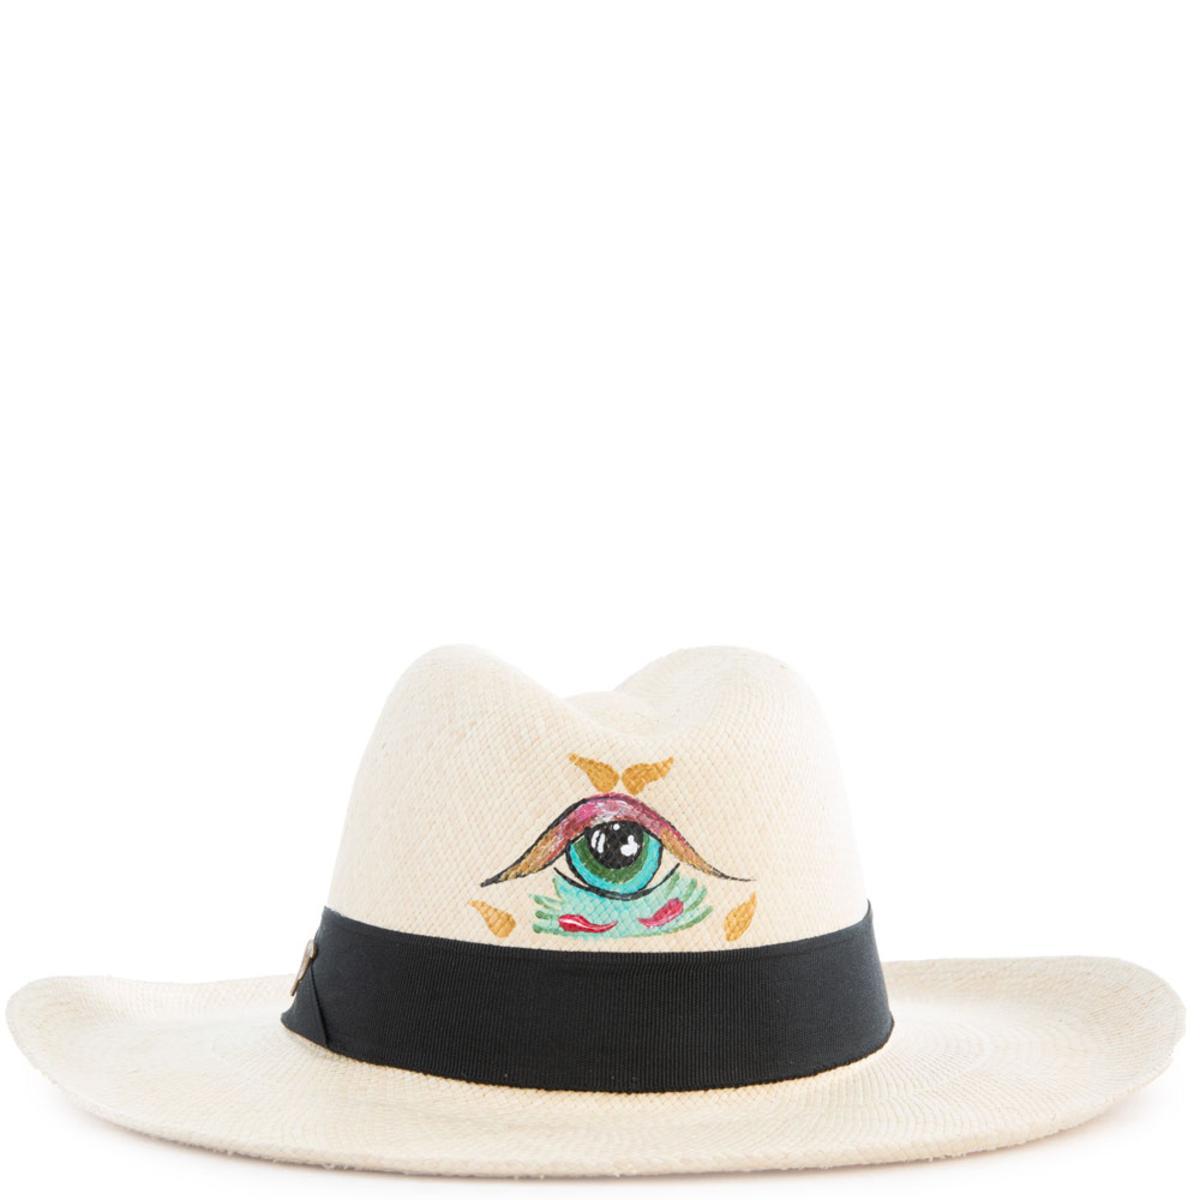 Mano De Hamsa Panama Hat Size M